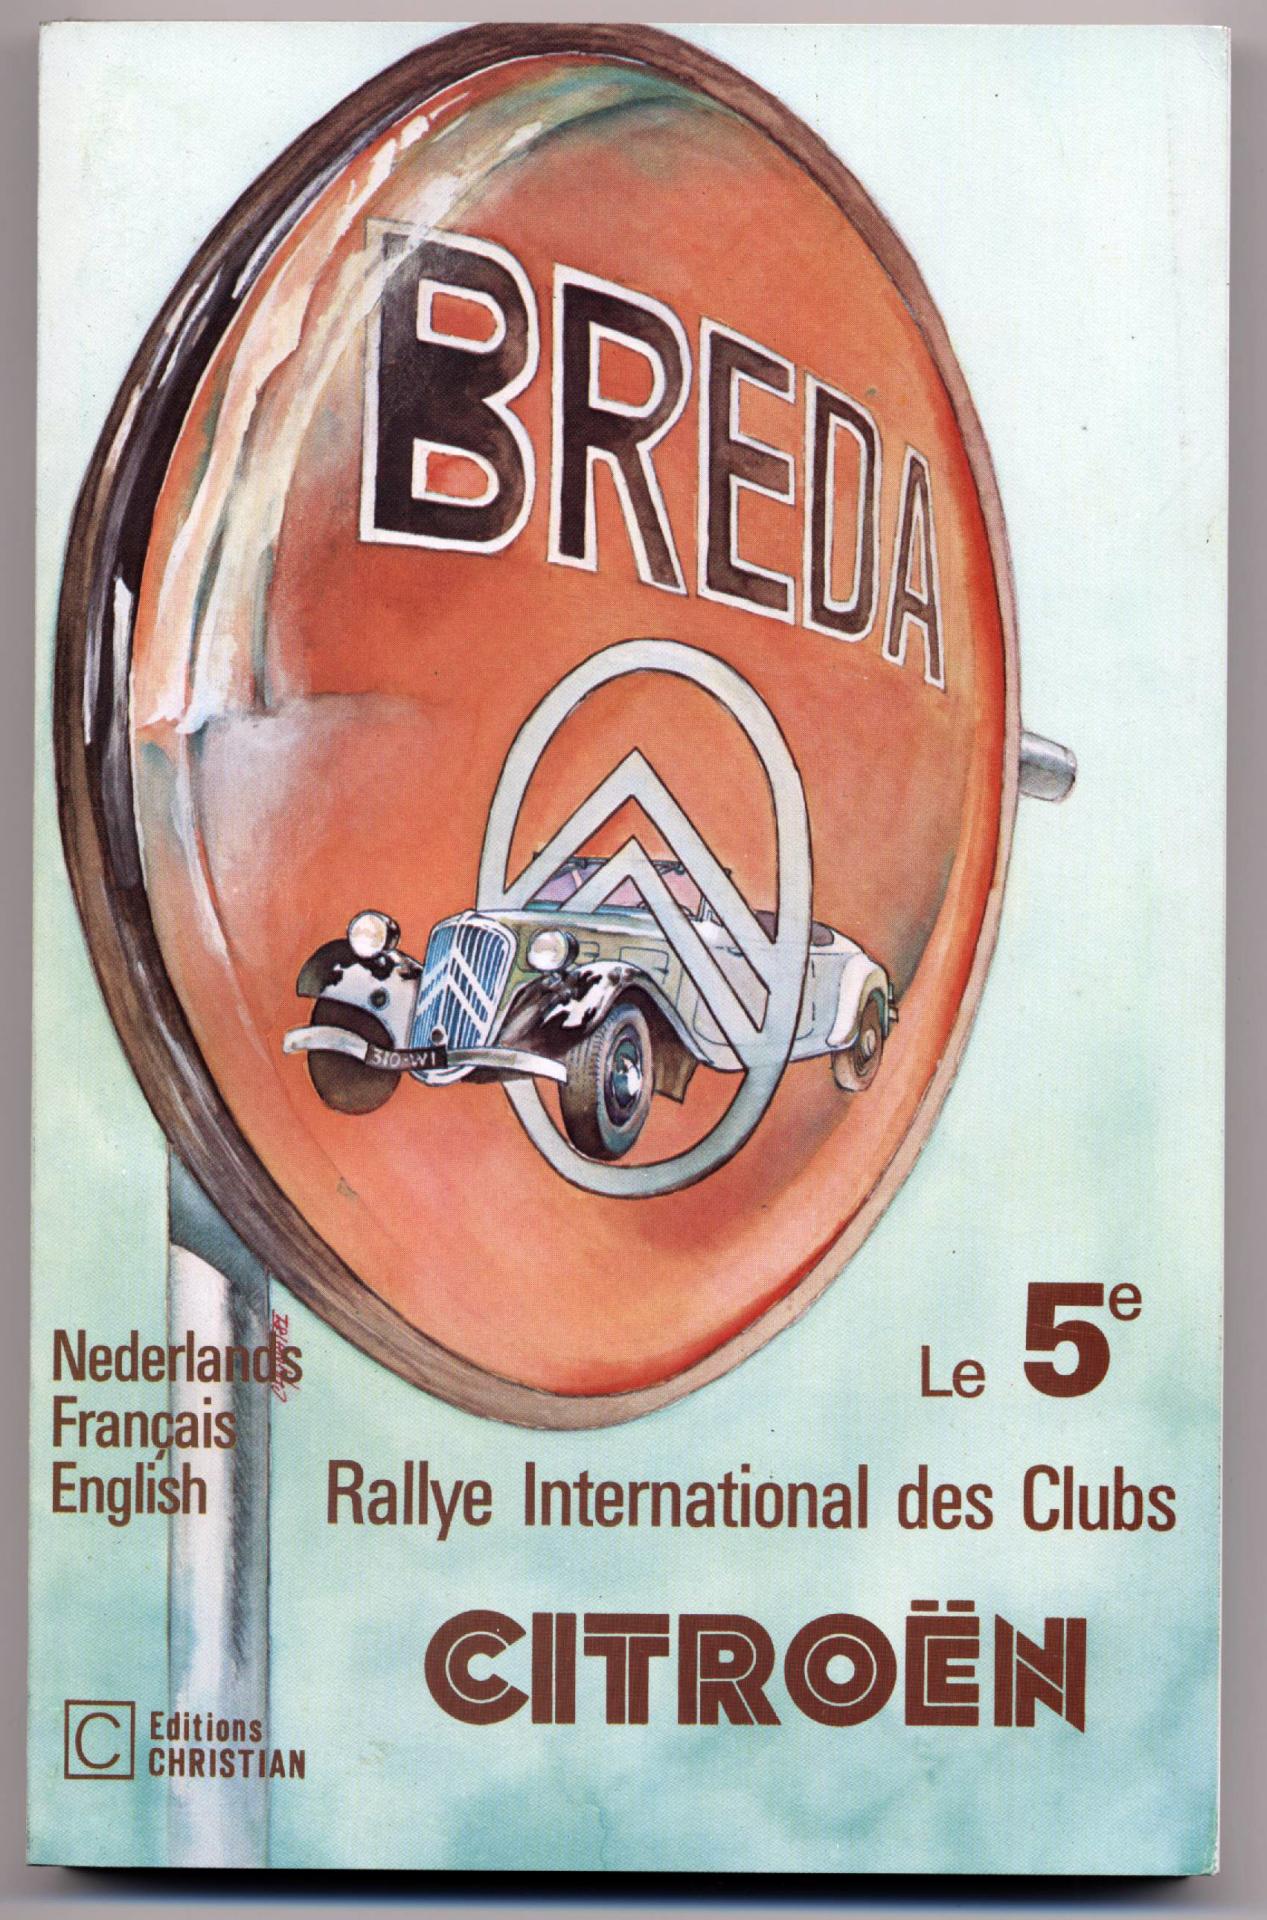 1981 5eme ICCCR Breda NL